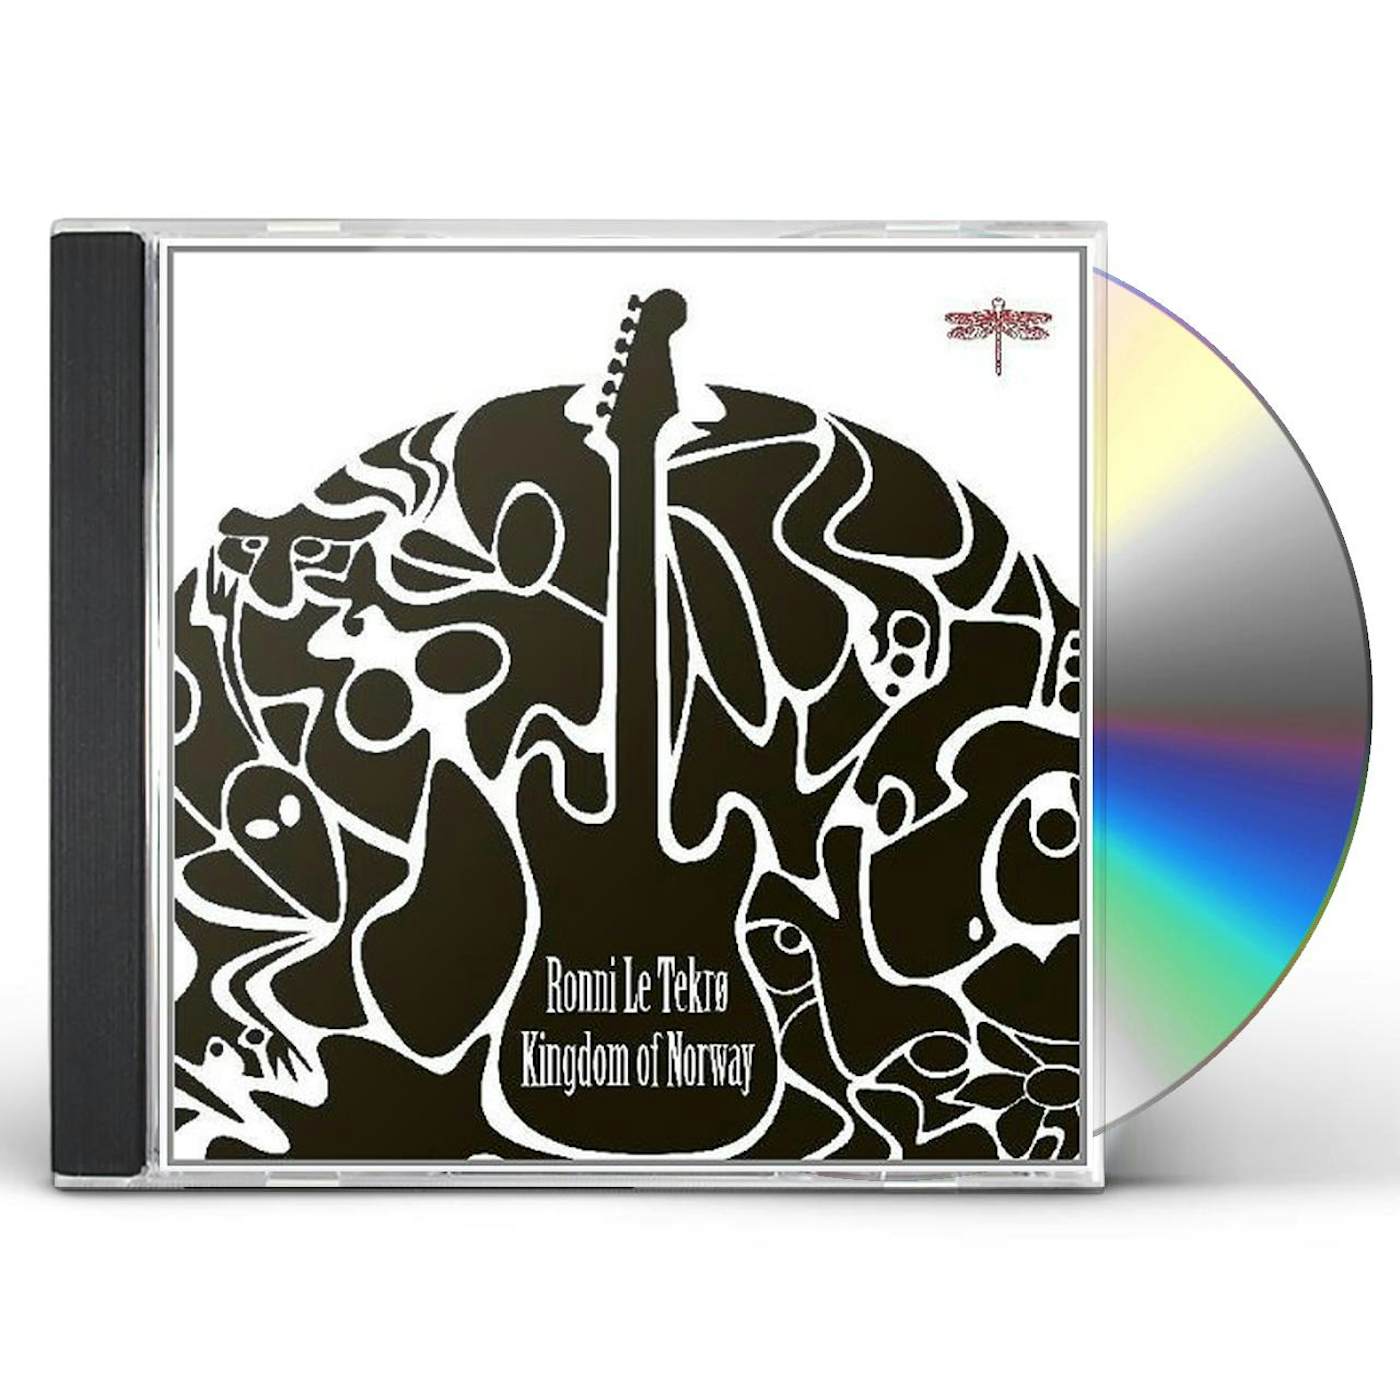 Ronni Le Tekro KINGDOM OF NORWAY CD